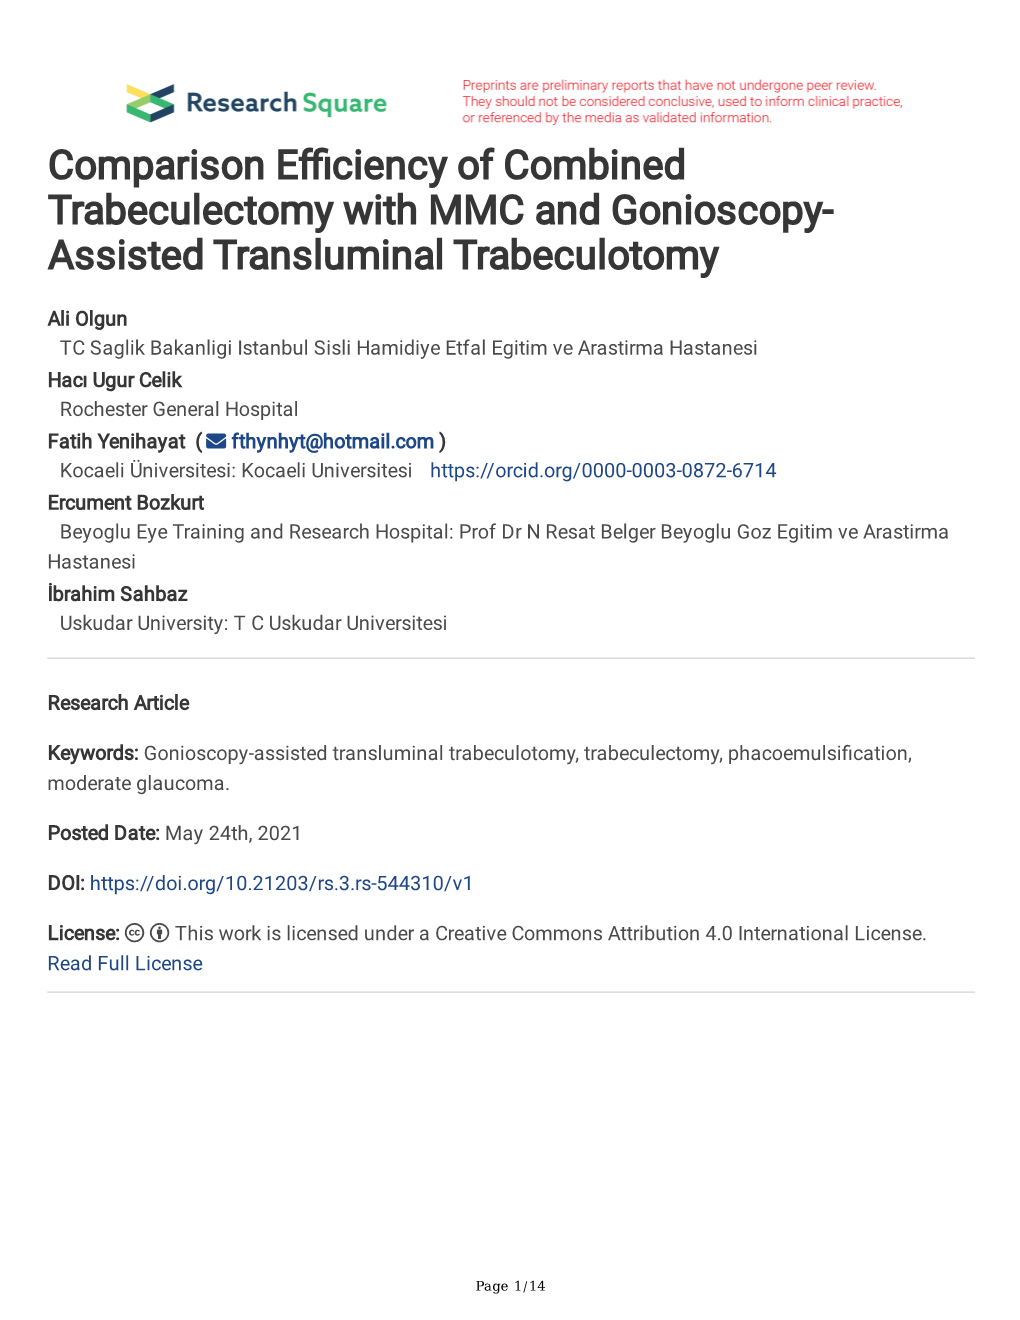 Assisted Transluminal Trabeculotomy